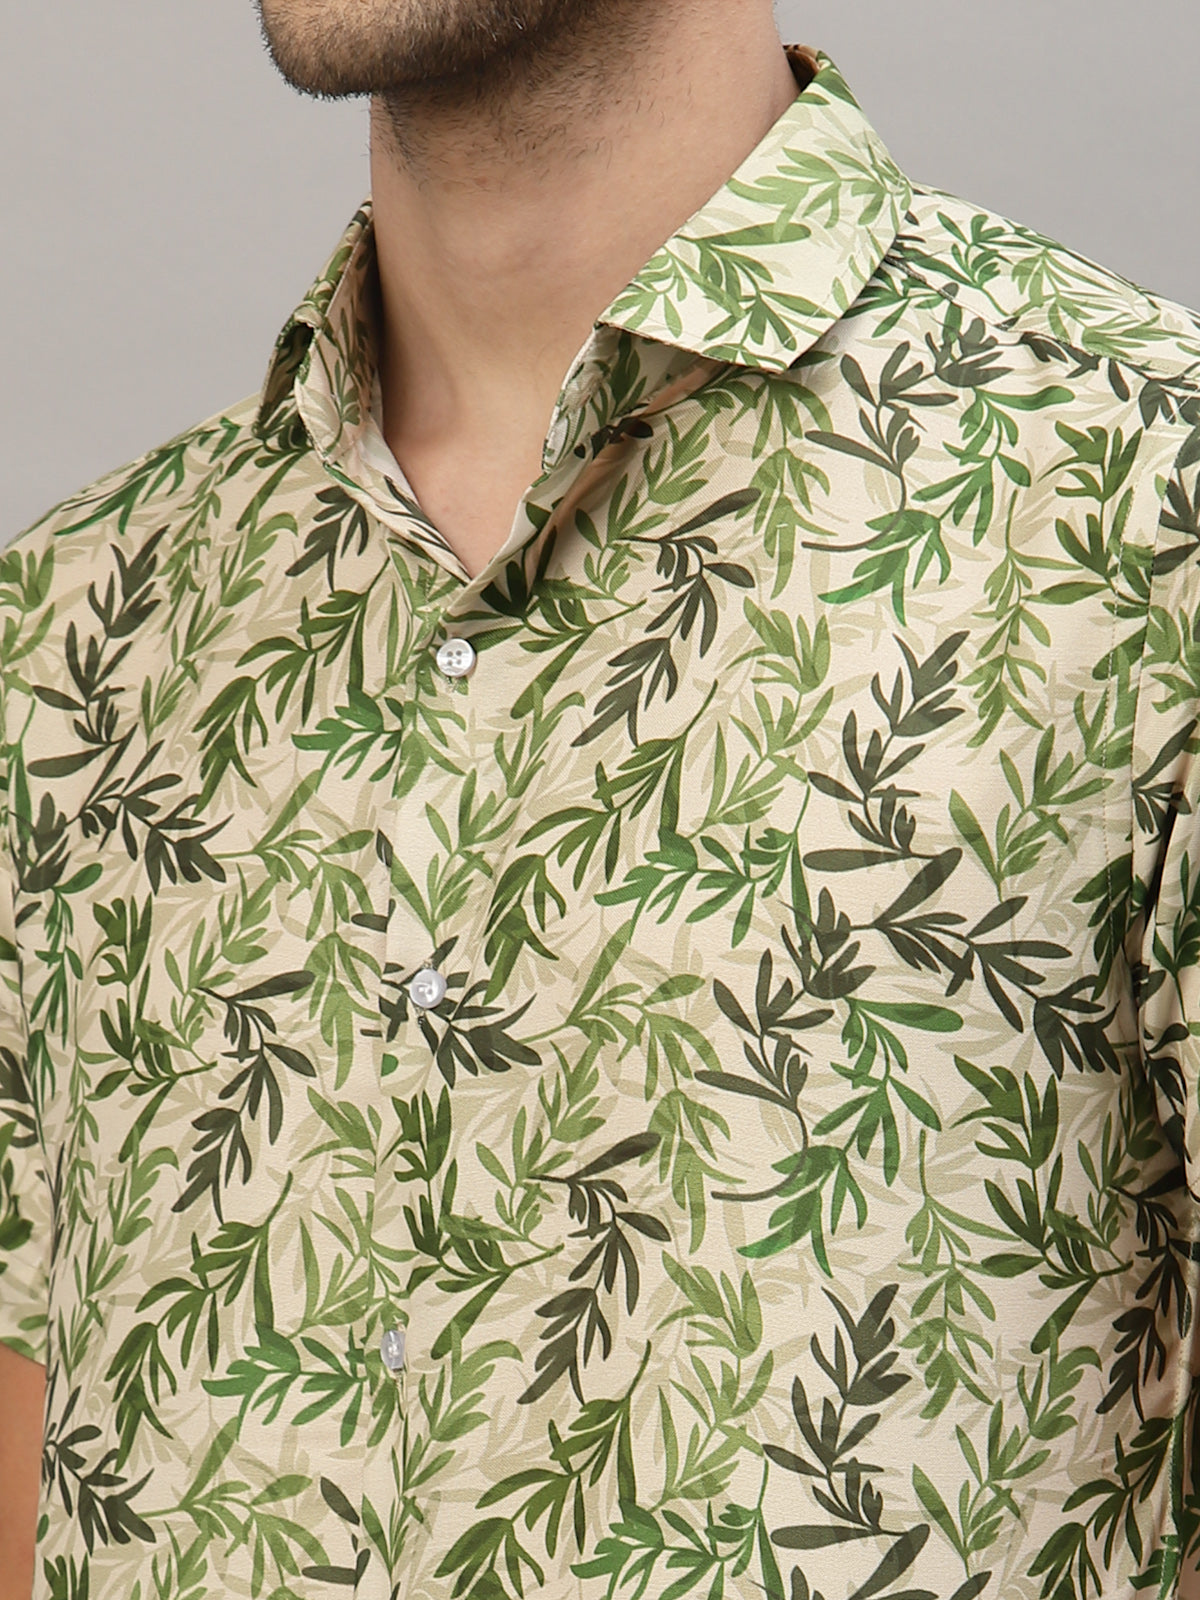 Green Leaves Half sleeve Shirt By Gavin Paris